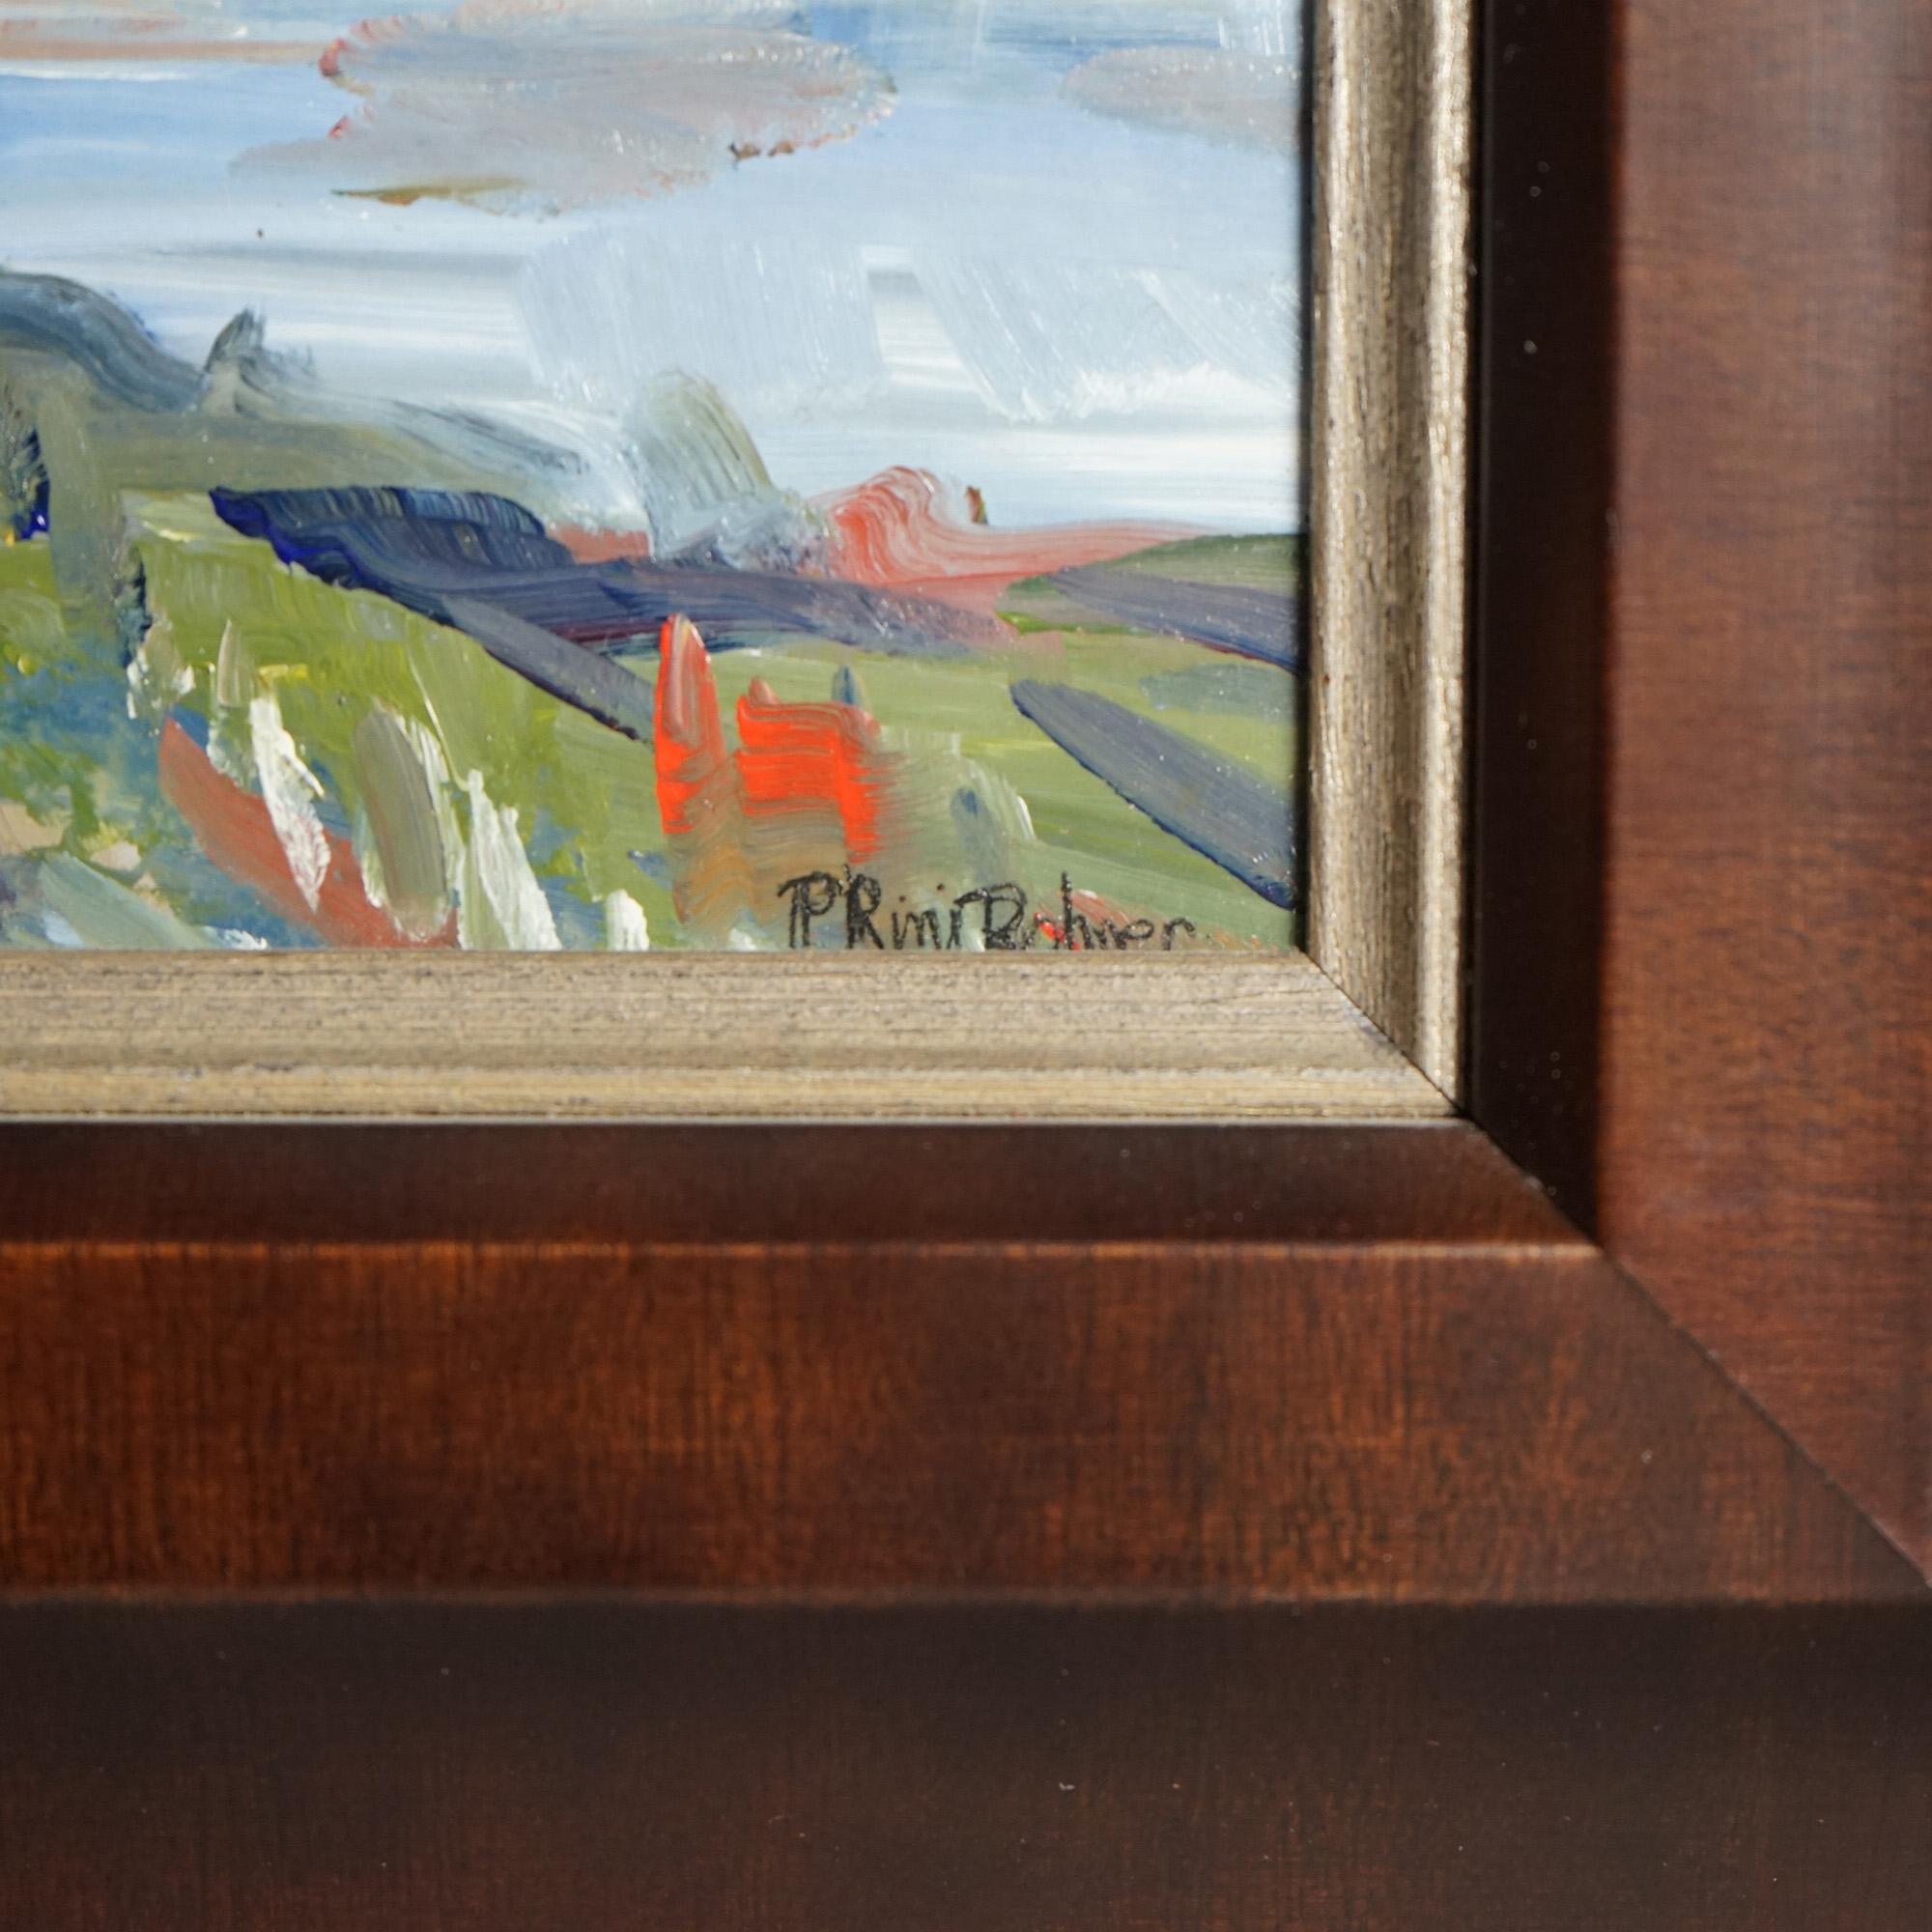 Impressionistic Painting Landscape Of Finger Lakes & Vineyard by PR Rohrer 20thC For Sale 4